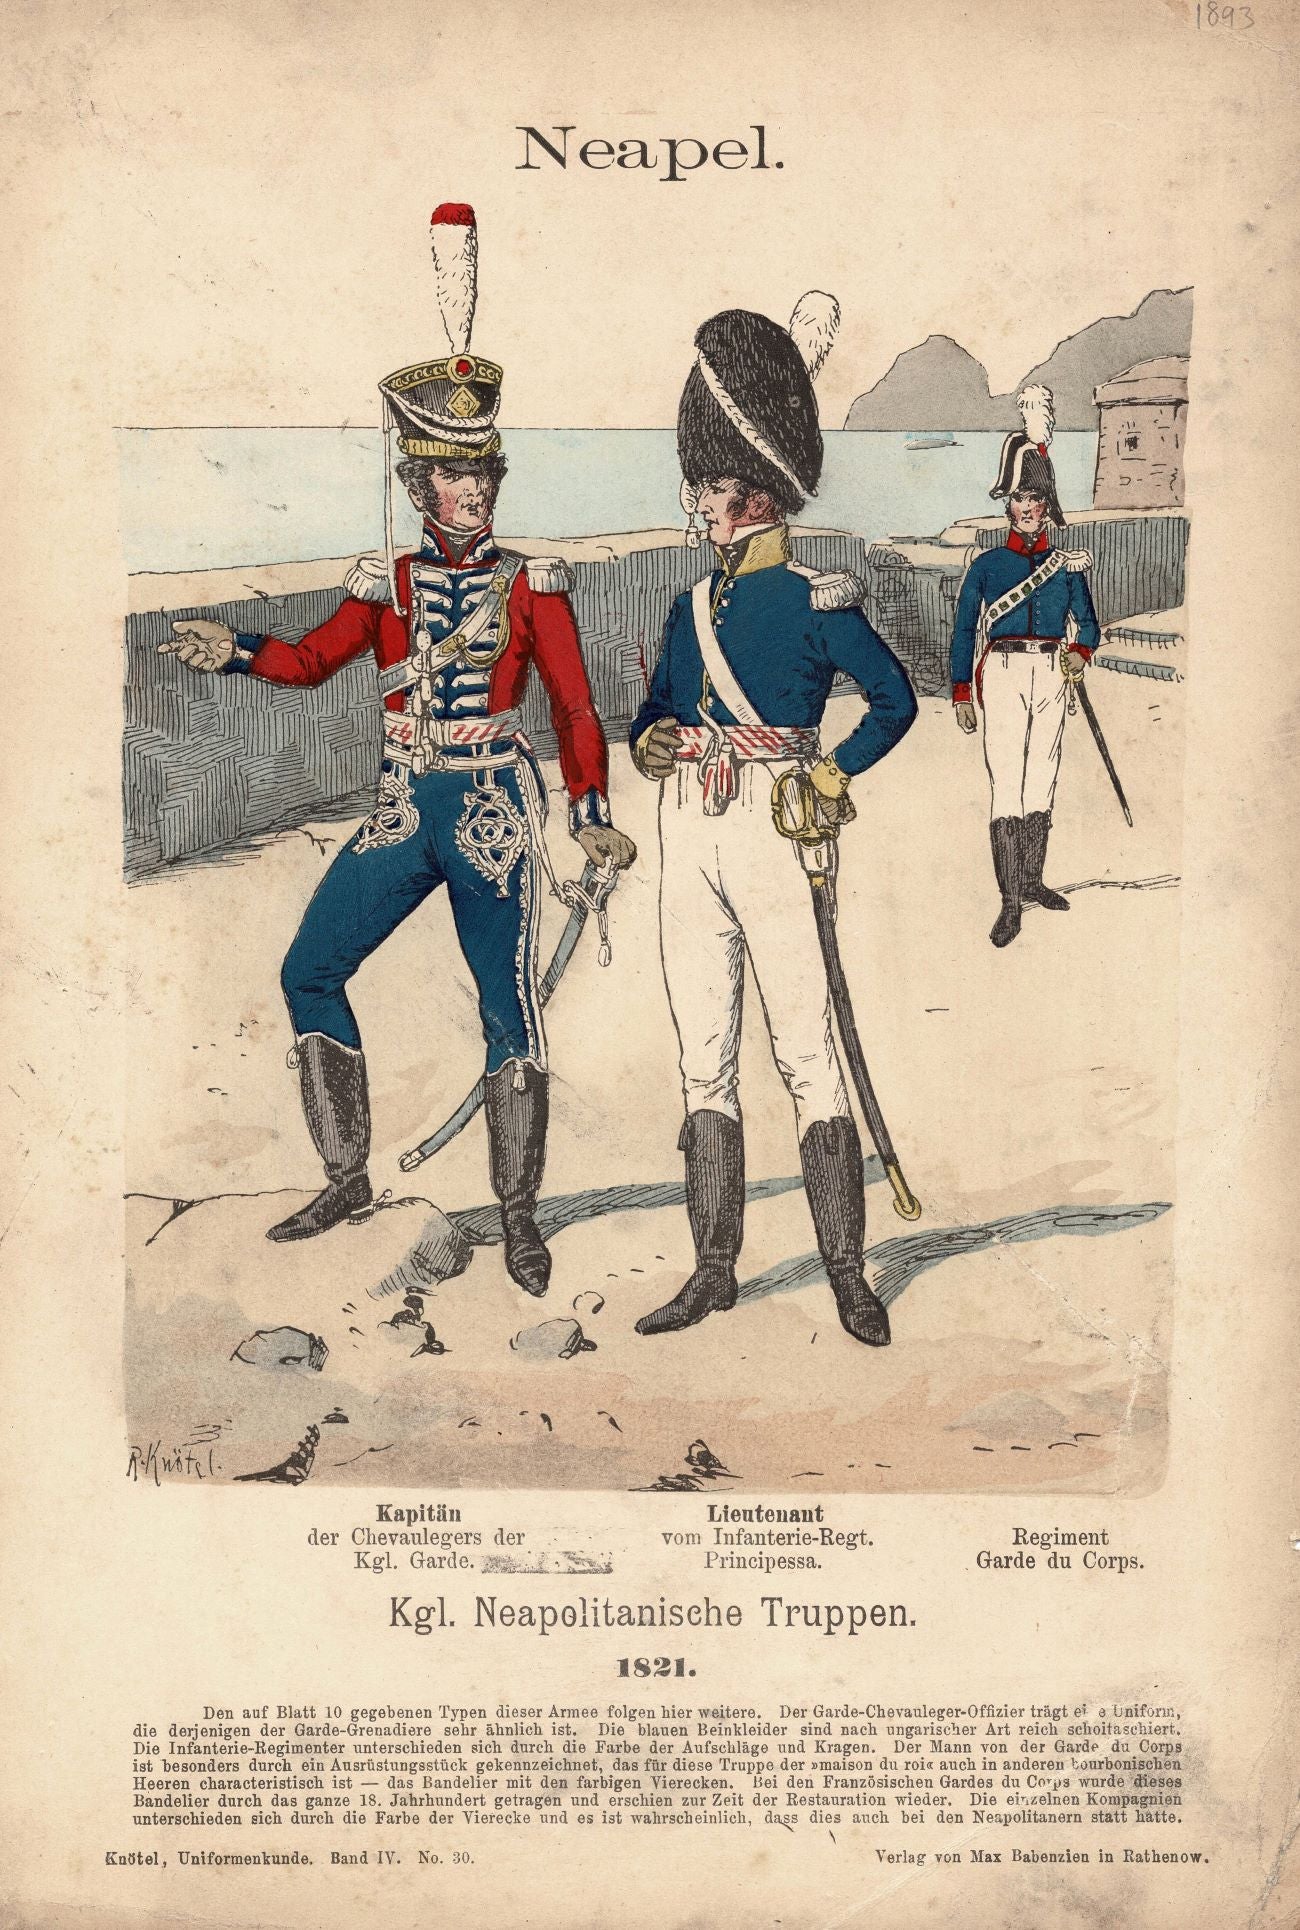 Naples Military Uniforms from 1821, Richard Knötel, 1893